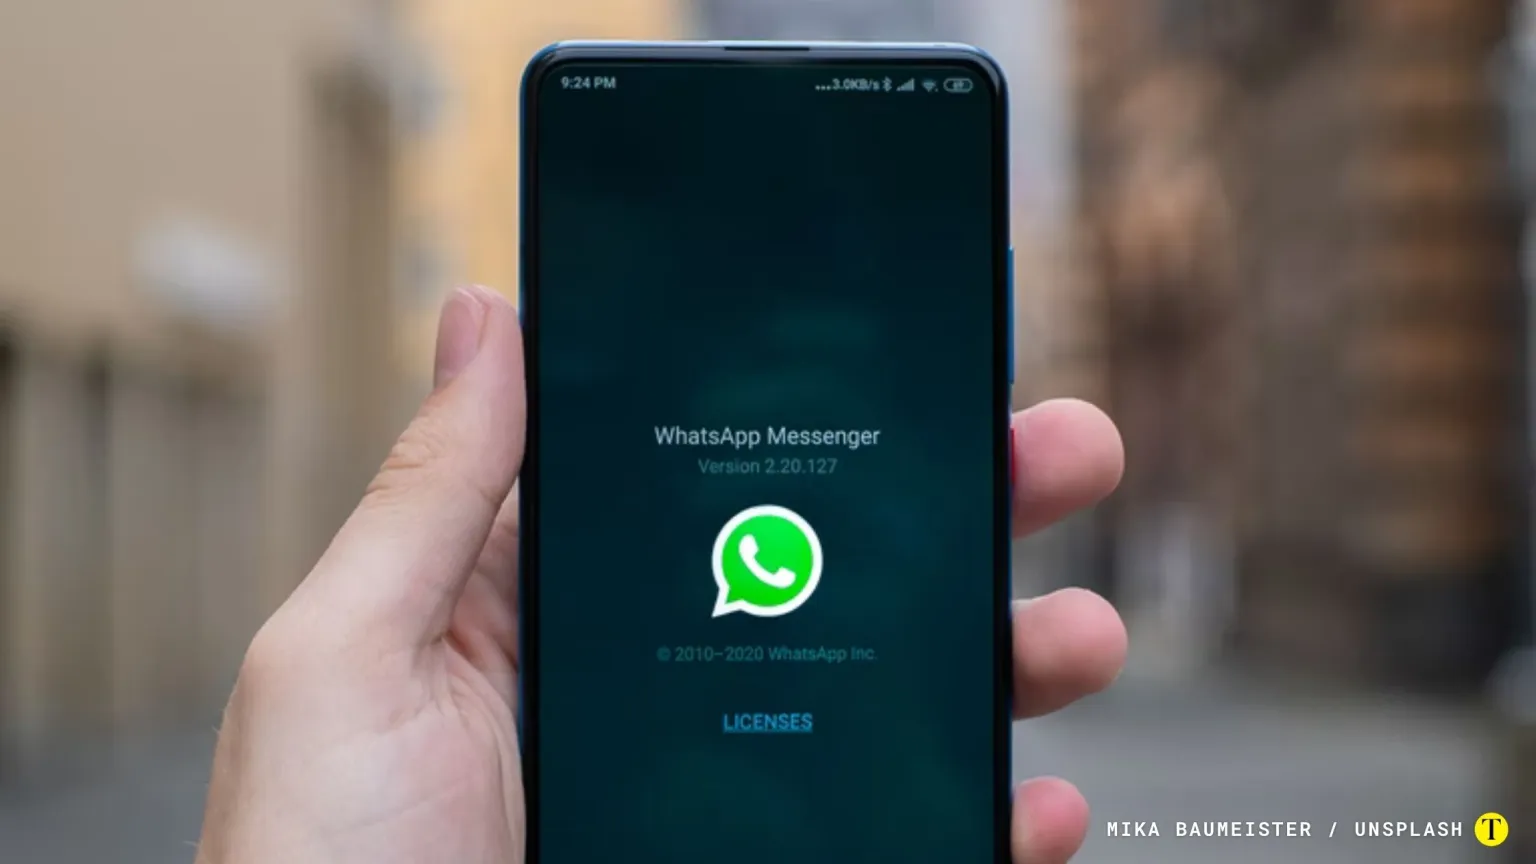 Fallas en WhatsApp podría afectar a emprendedores digitales